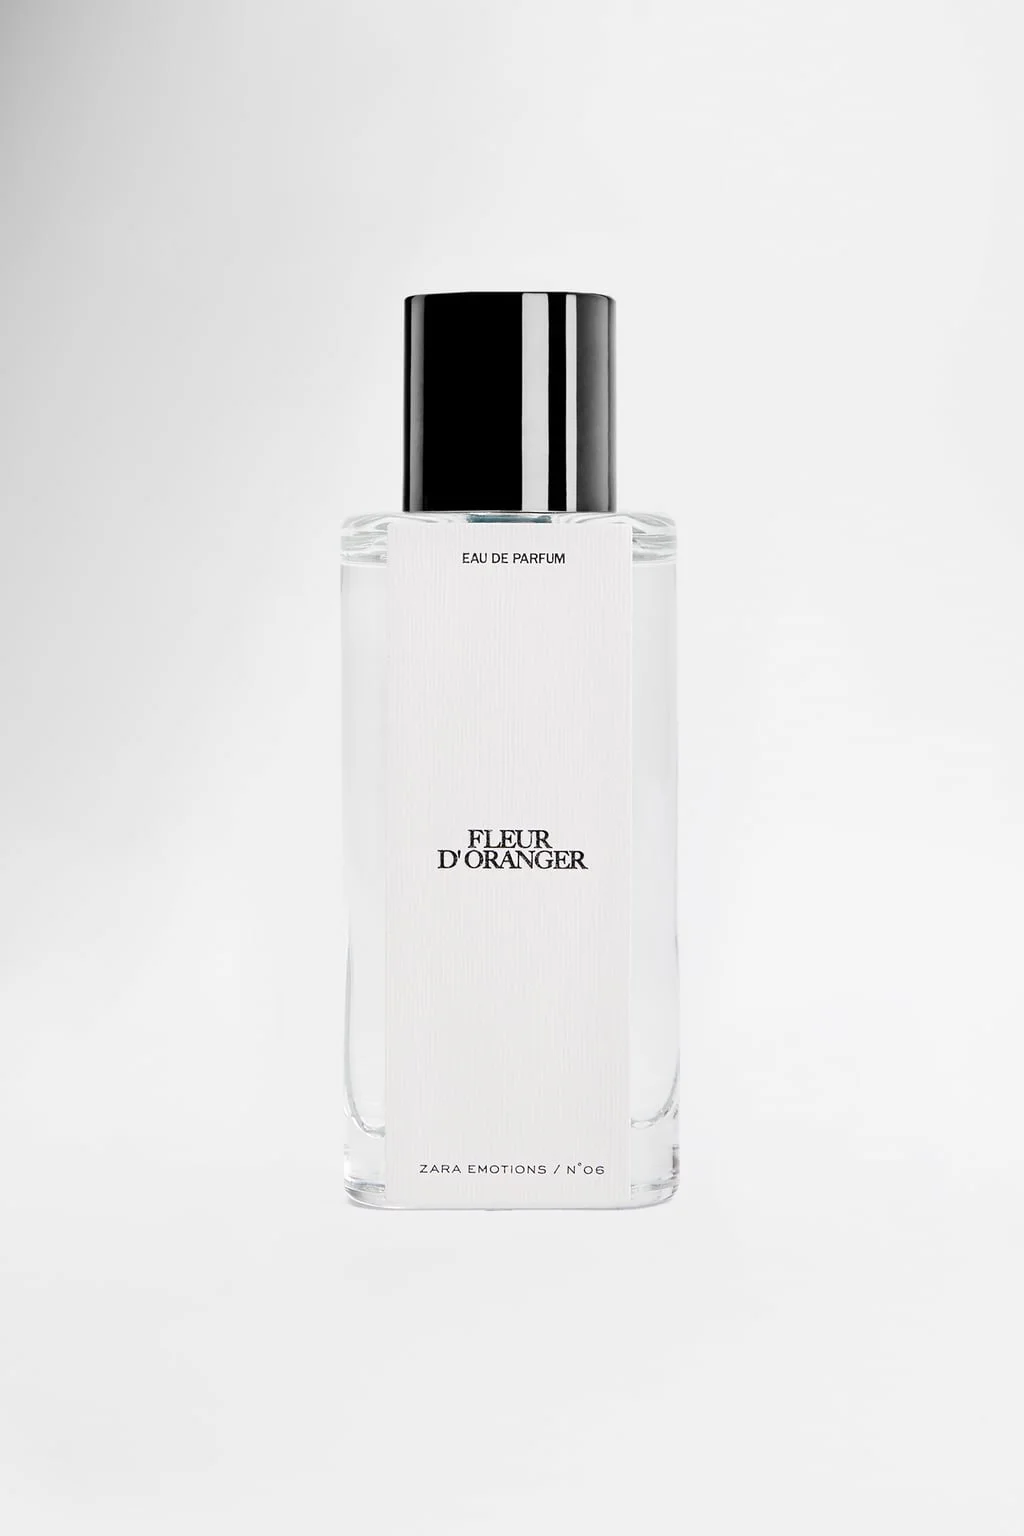 Zara's bargain perfume range from £6 goes viral as TikTok users liken  scents to YSL and Lancôme - OK! Magazine